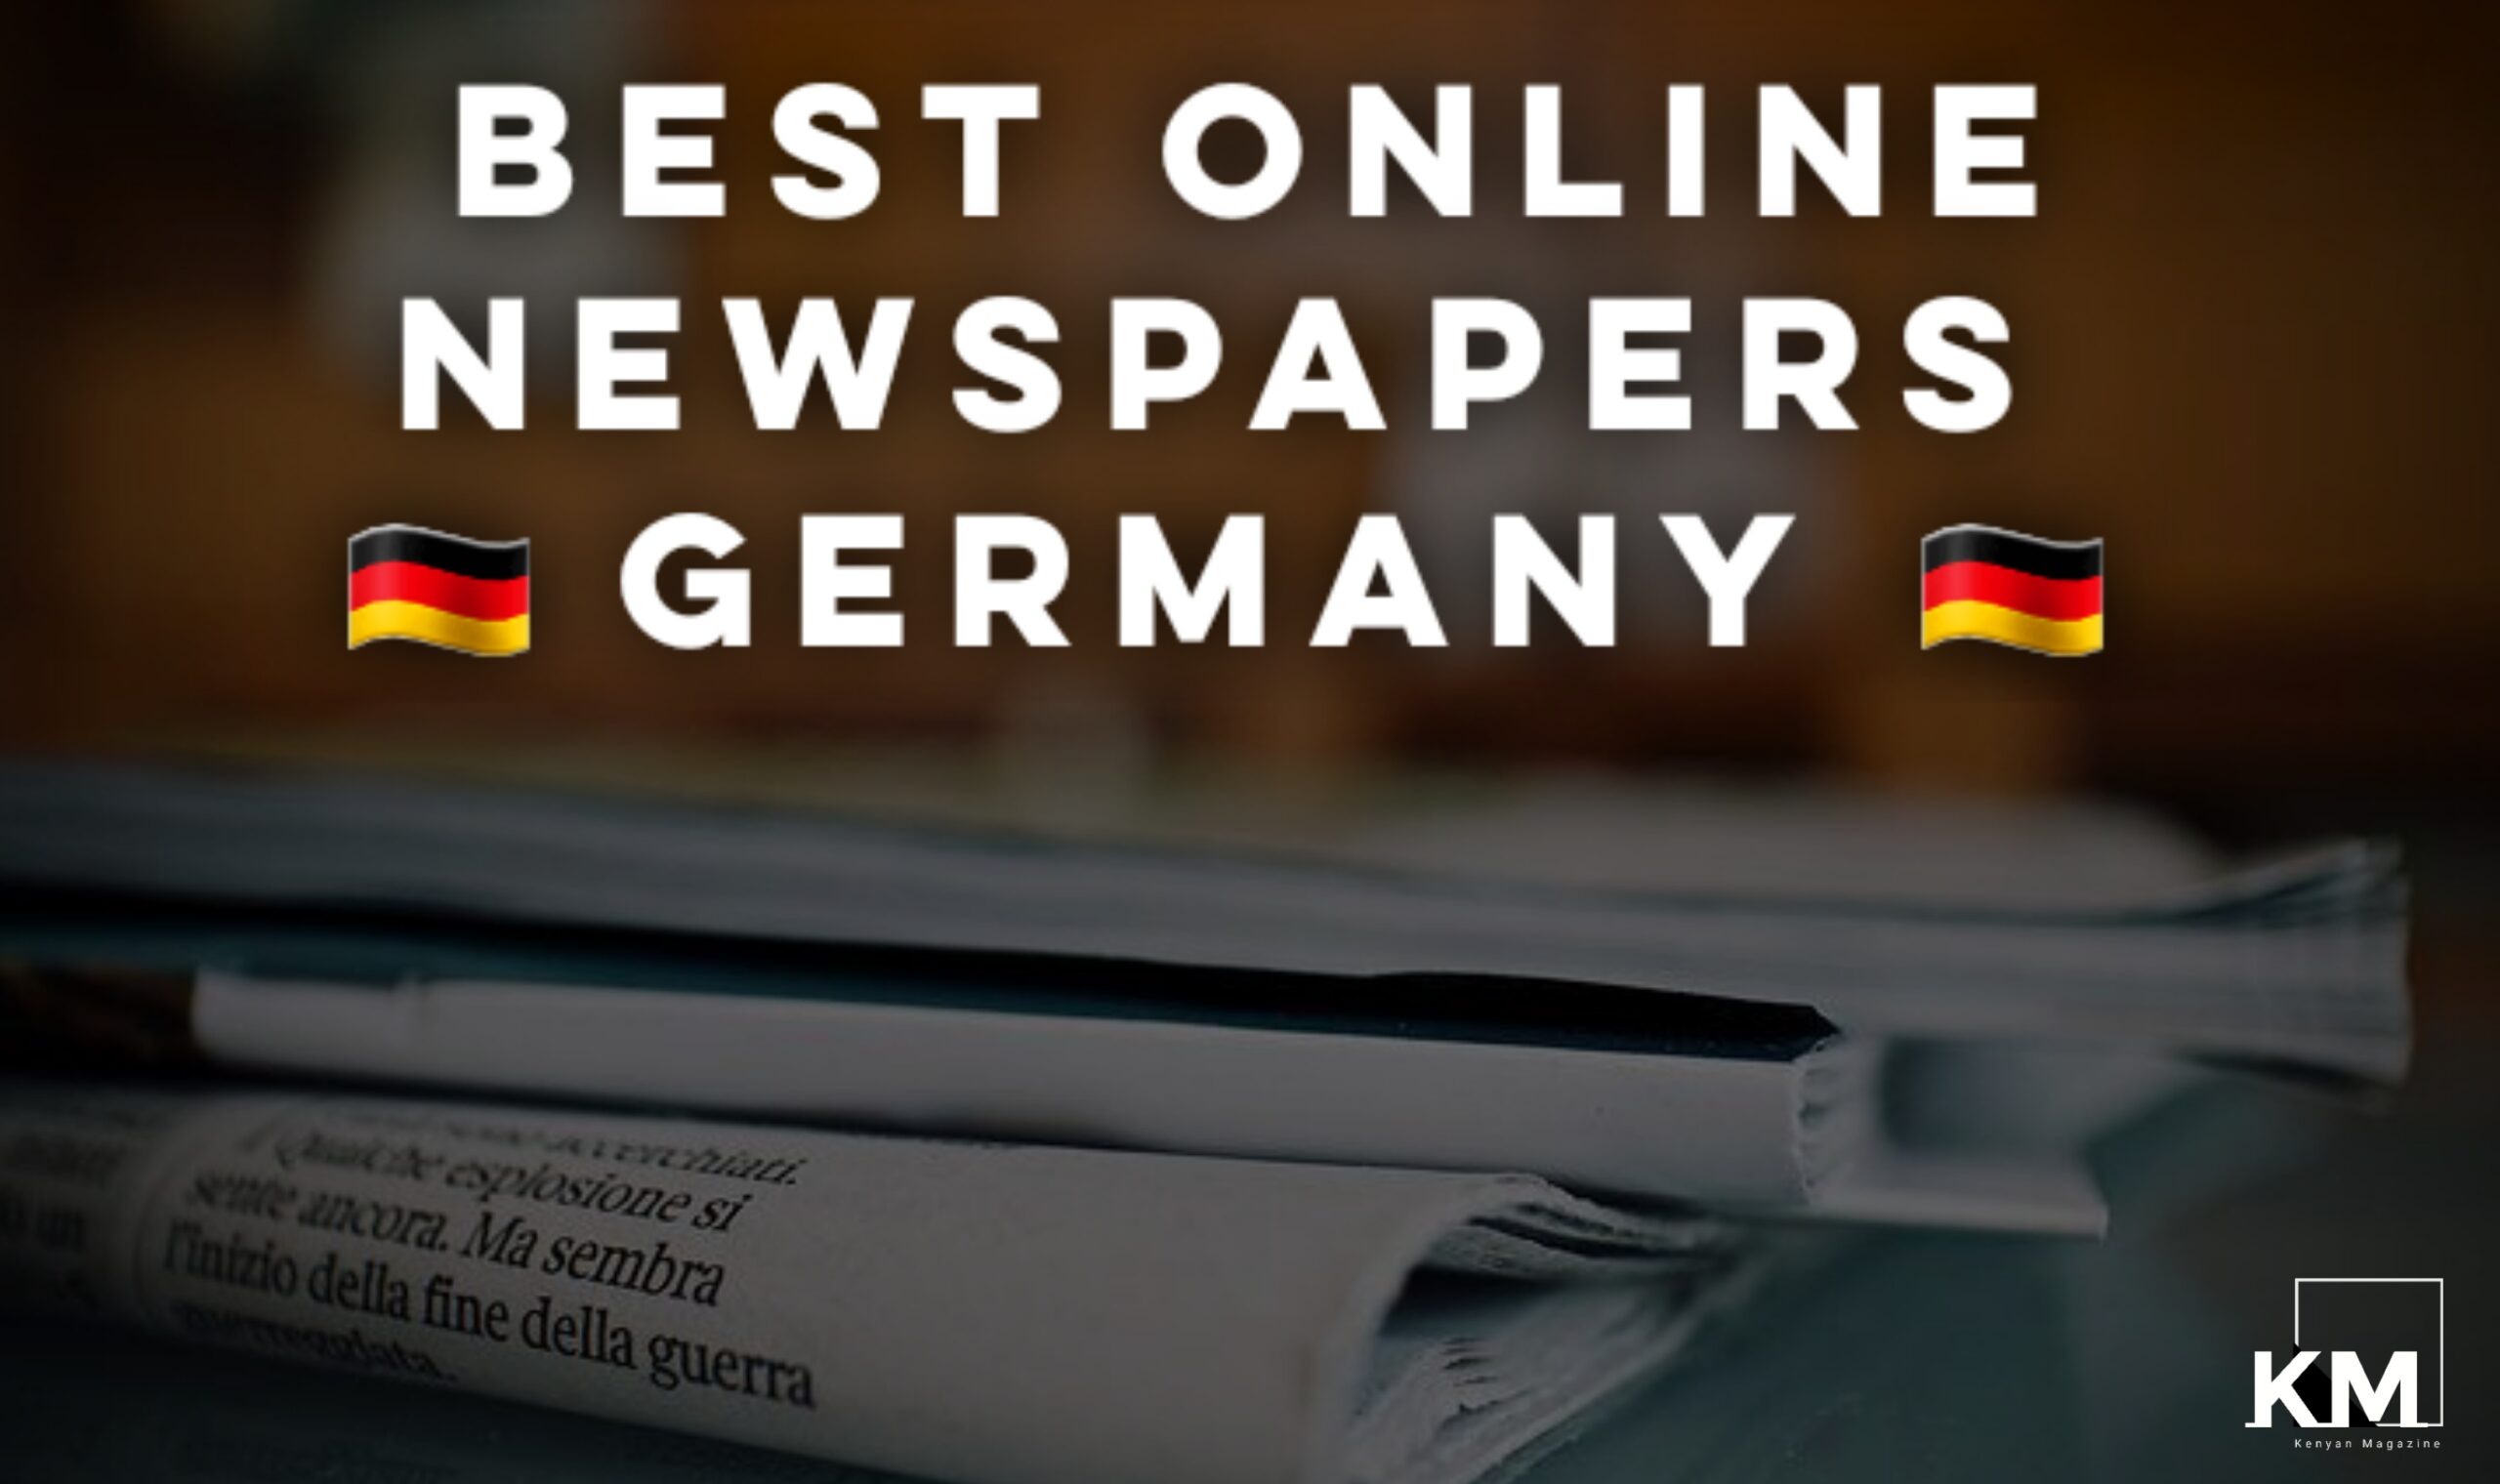 Best online newspapers in Germany